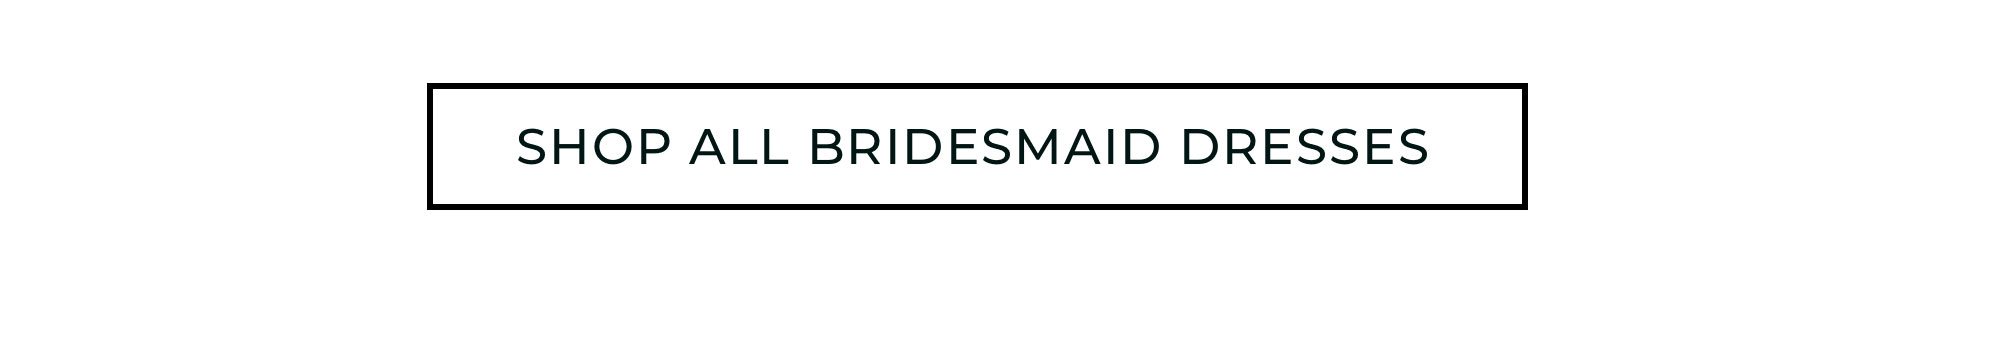 shop all bridesmaid dressess